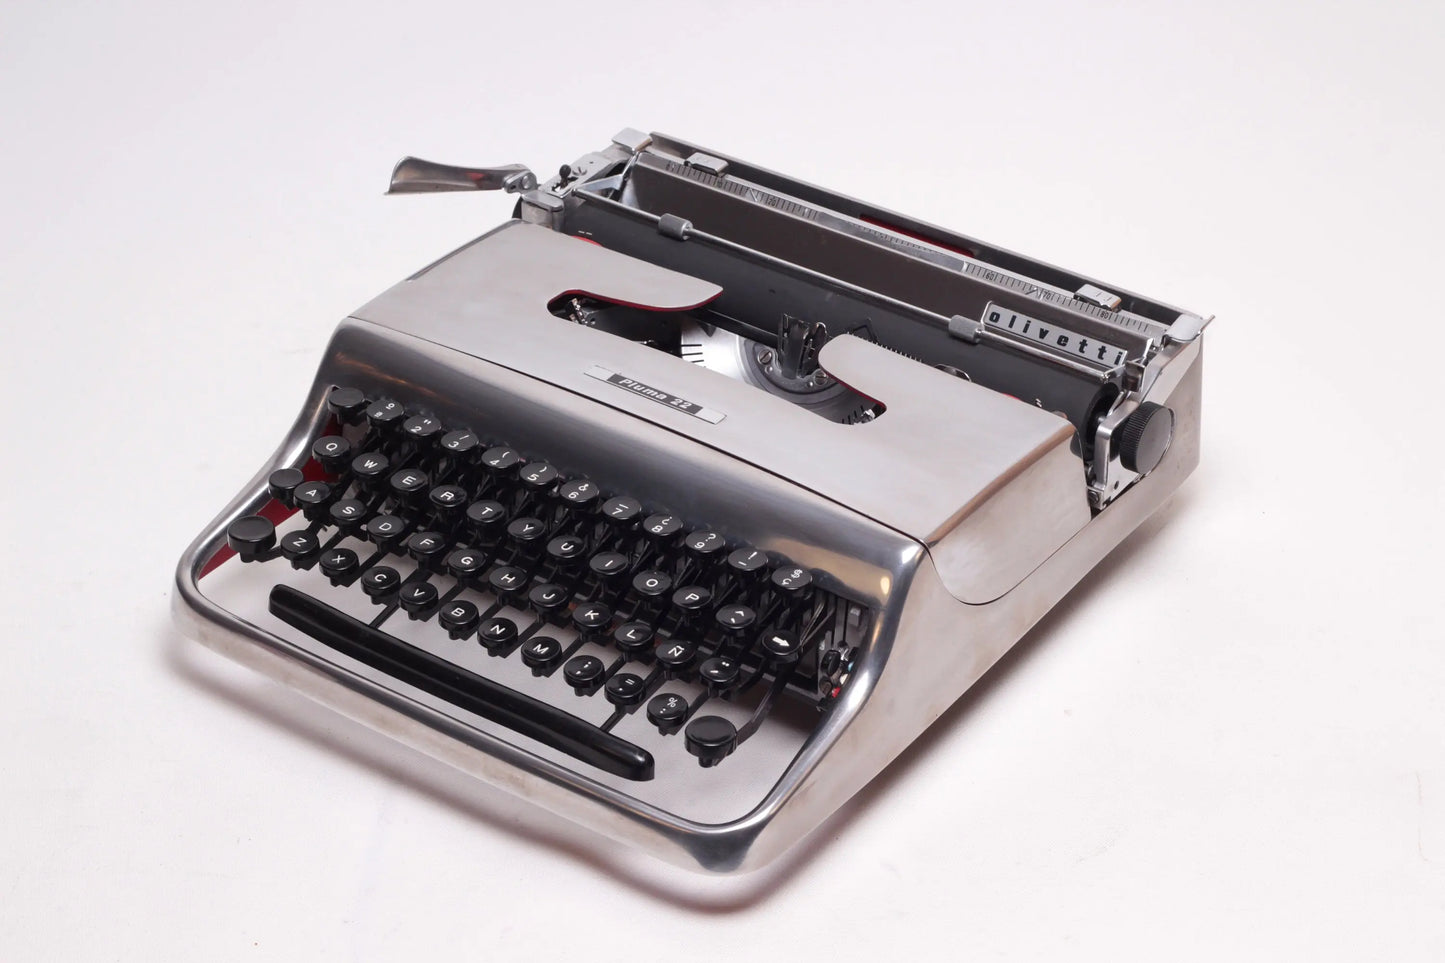 SALE! - Limited Edition Olivetti Pluma 22 "Chrome" Aluminum Typewriter, Vintage, Professionally Serviced - ElGranero Typewriter.Company